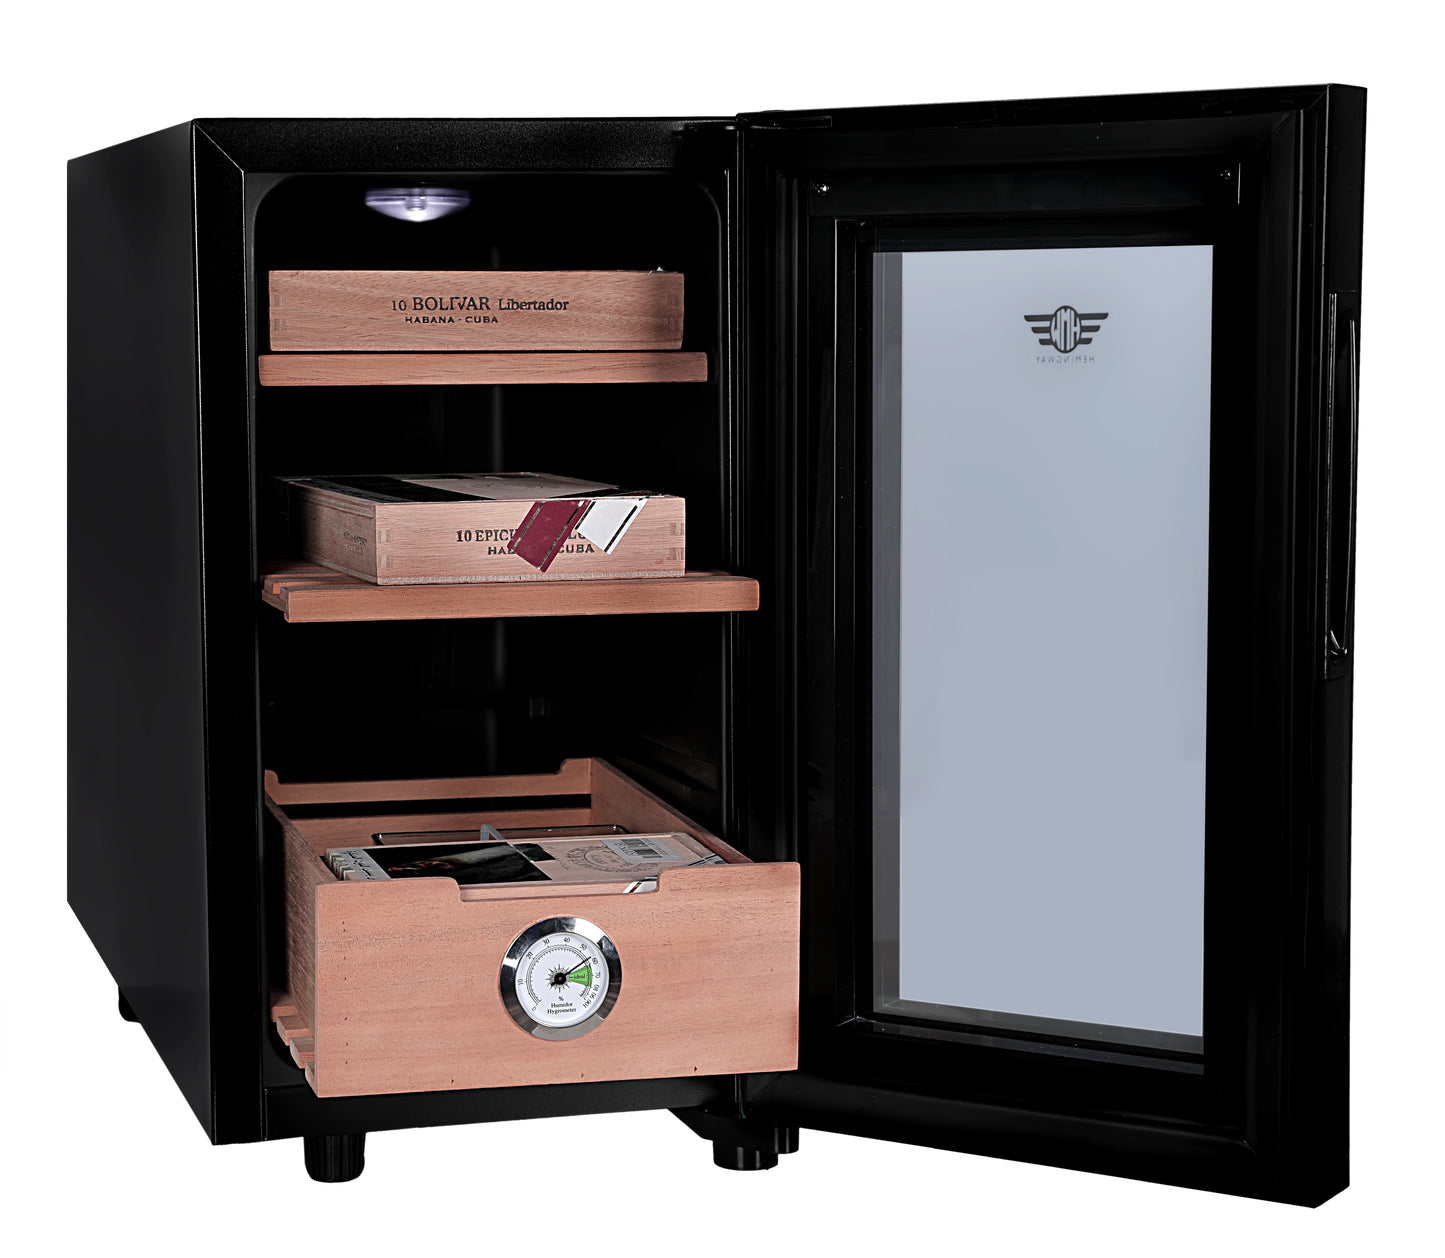 Hemingway Electric Cigar Humidor Cabinet With Hygrometer Thermo Electric Cigar Humidor